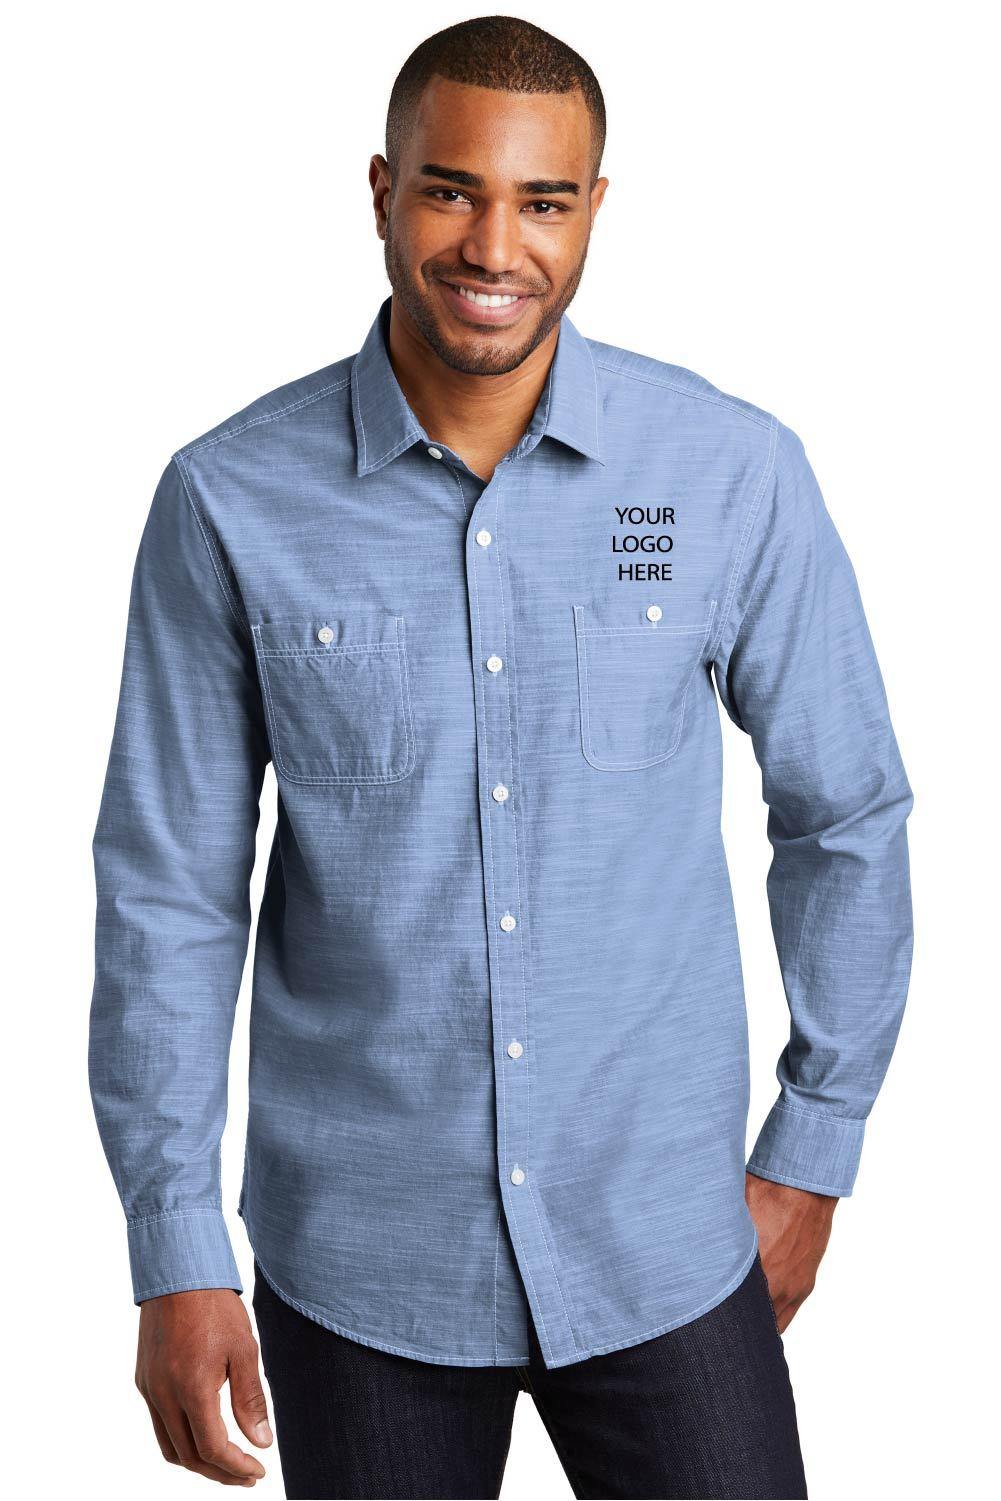 Keller Williams KW-SMW380 PA® Men's Long Sleeve Chambray Shirt 